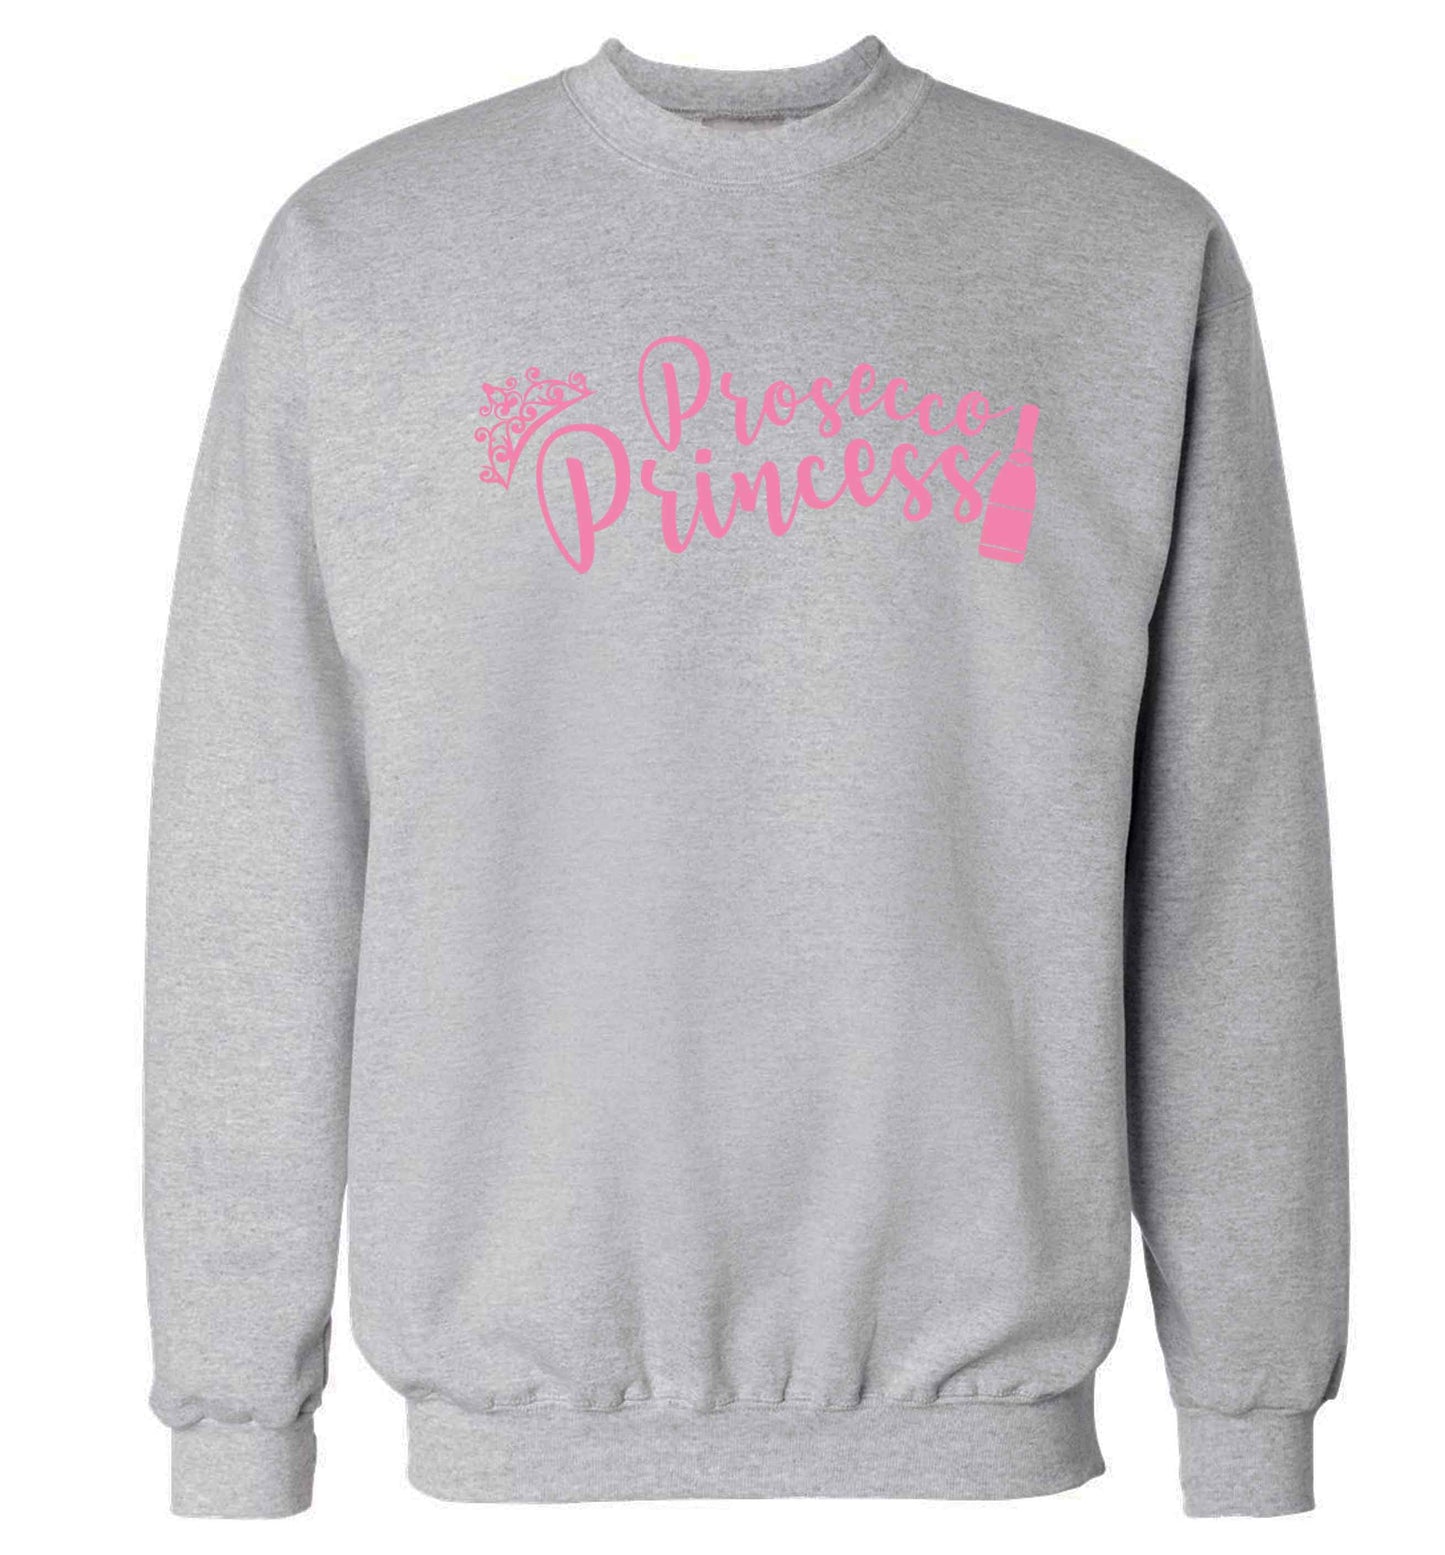 Prosecco princess Adult's unisex grey Sweater 2XL